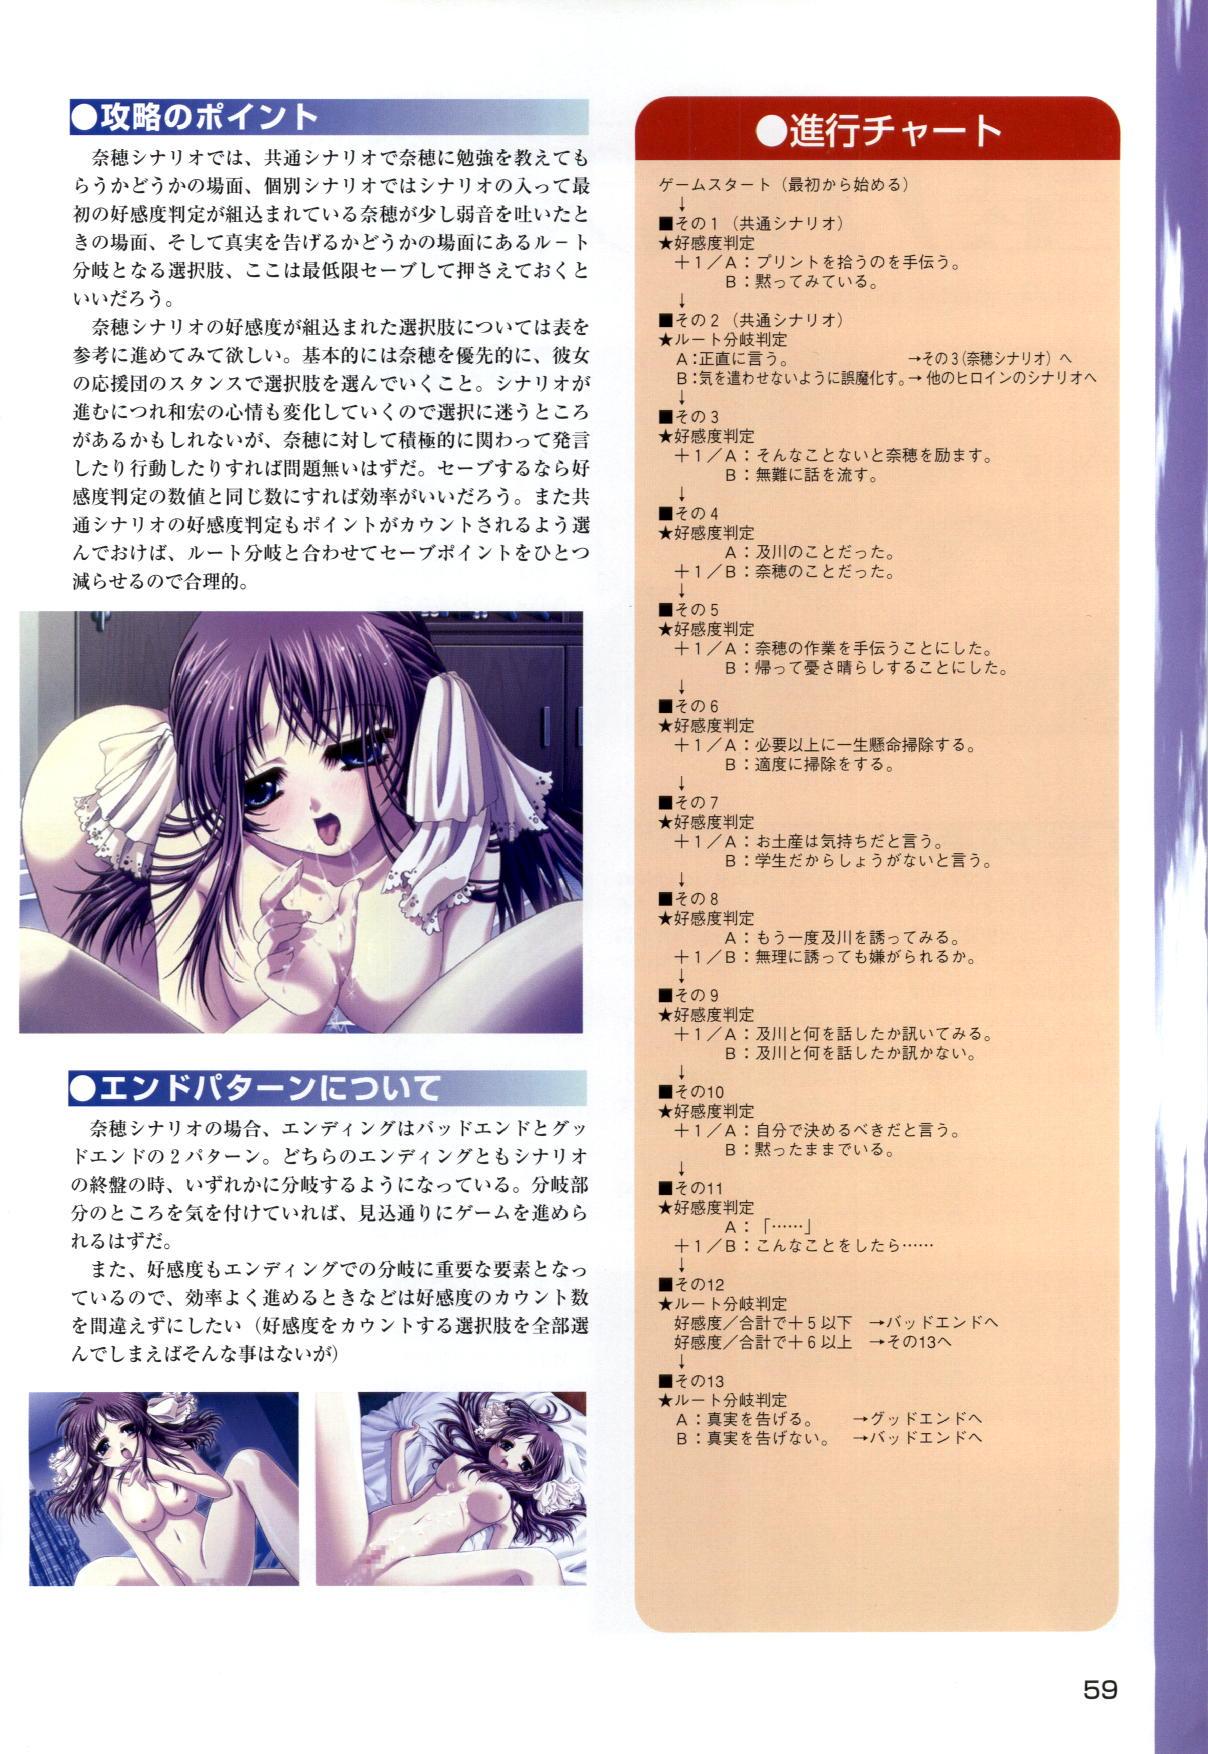 [Katagiri Hinata, Hikage Eiji] ONE2 ~Eien no Yakusoku~ Official FanBook 60